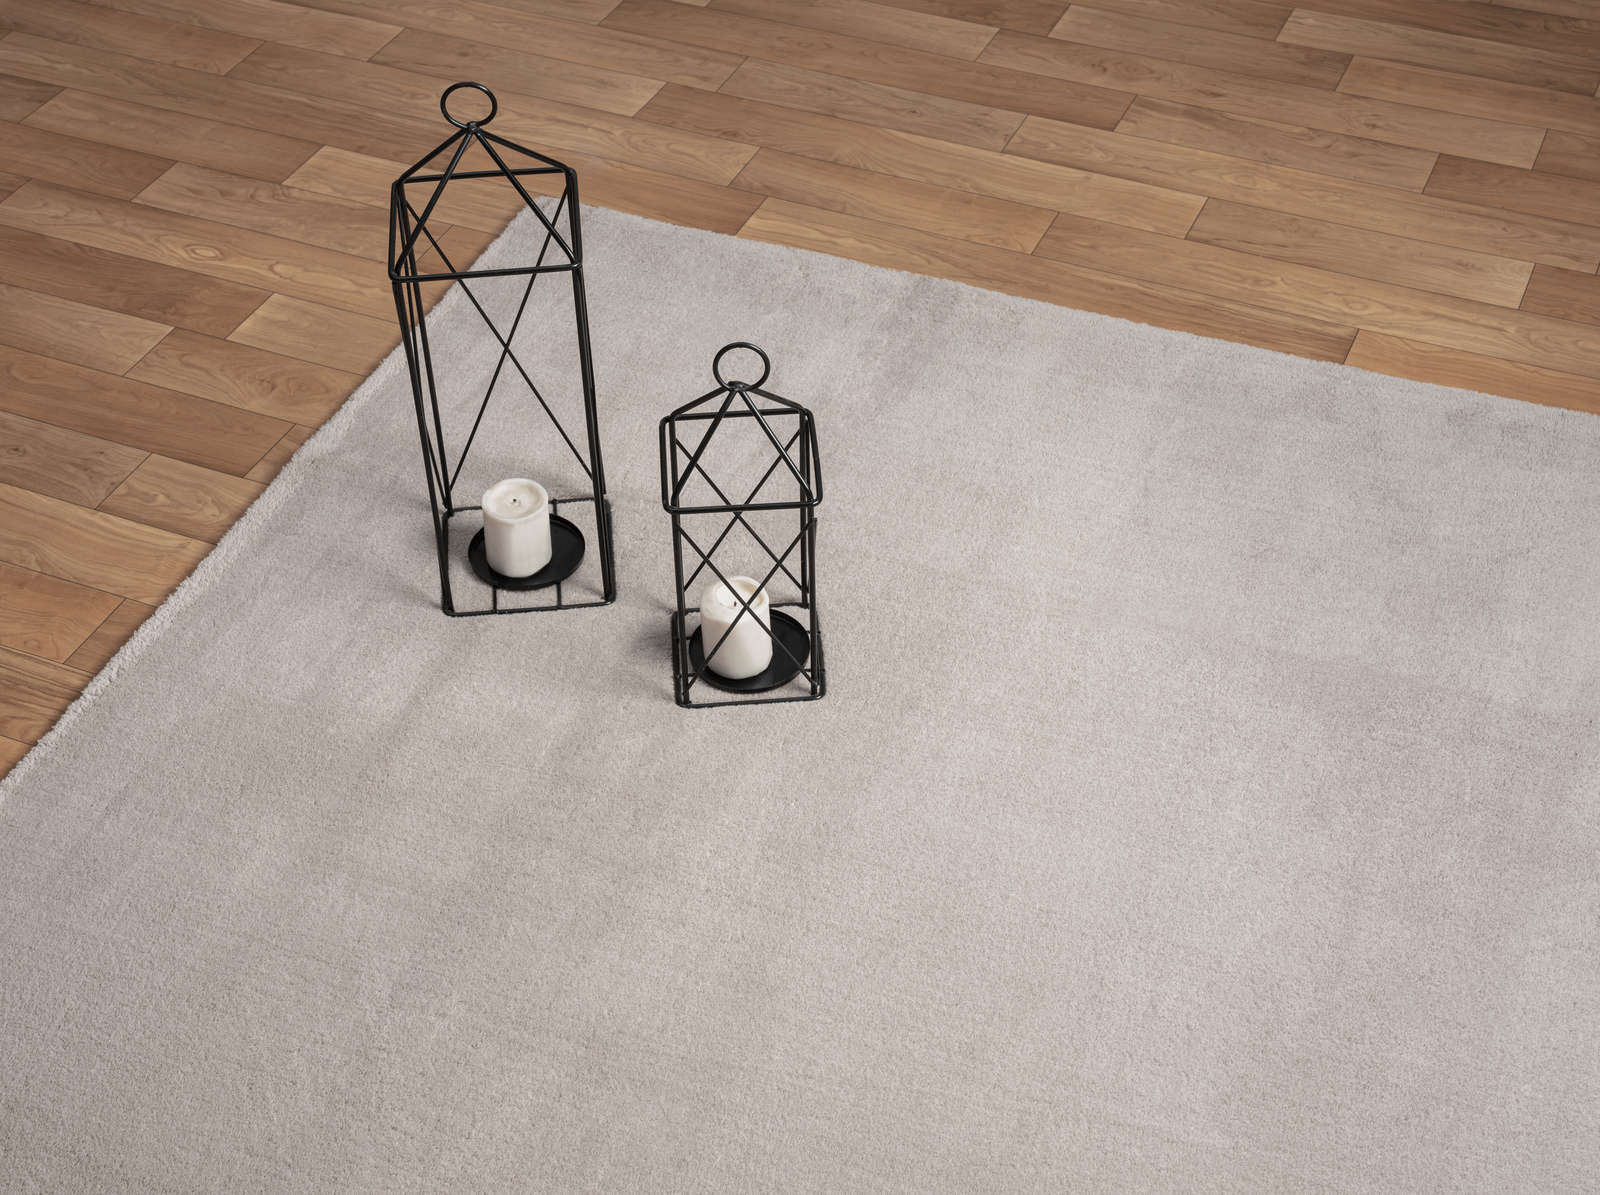             Fashionable high pile carpet in sand - 340 x 240 cm
        